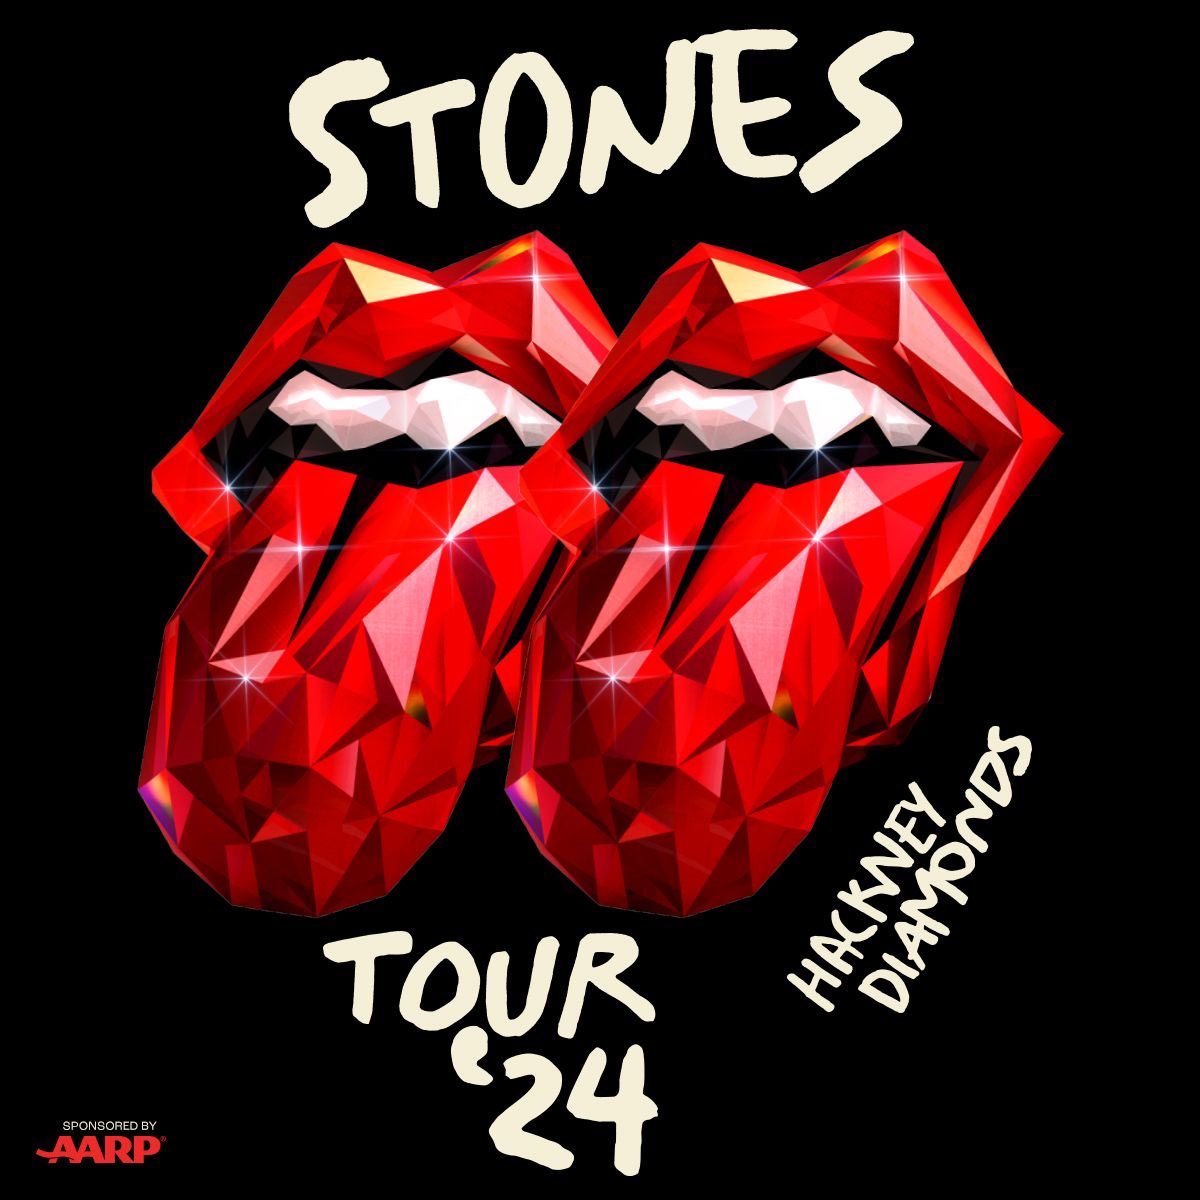 The Rolling Stones (@RollingStones) / X